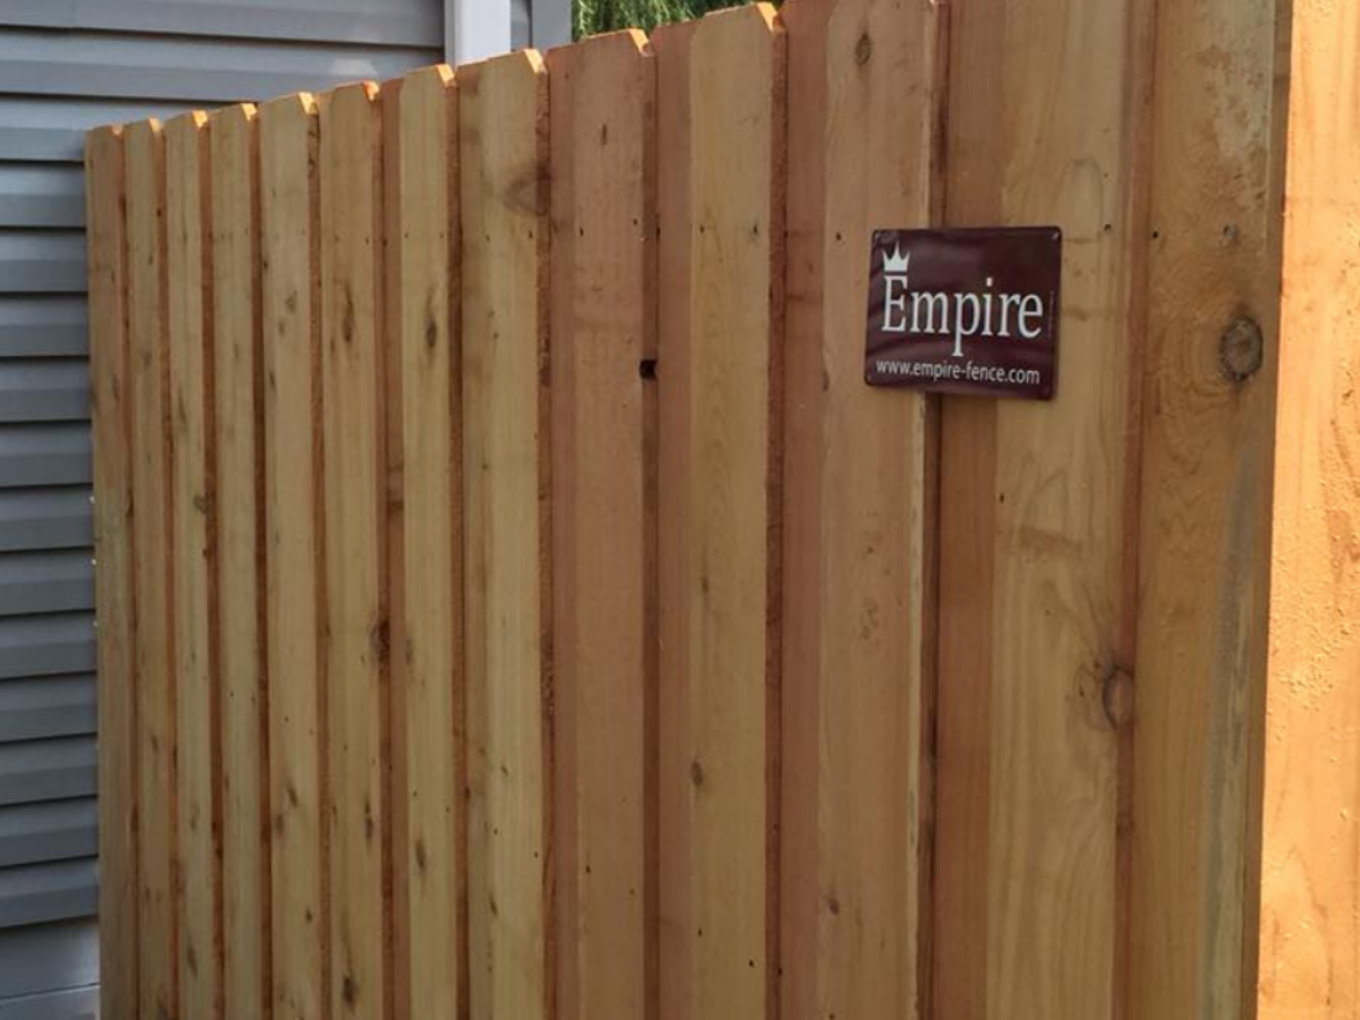 Crete NE Shadowbox semi-privacy Wood Fence Design